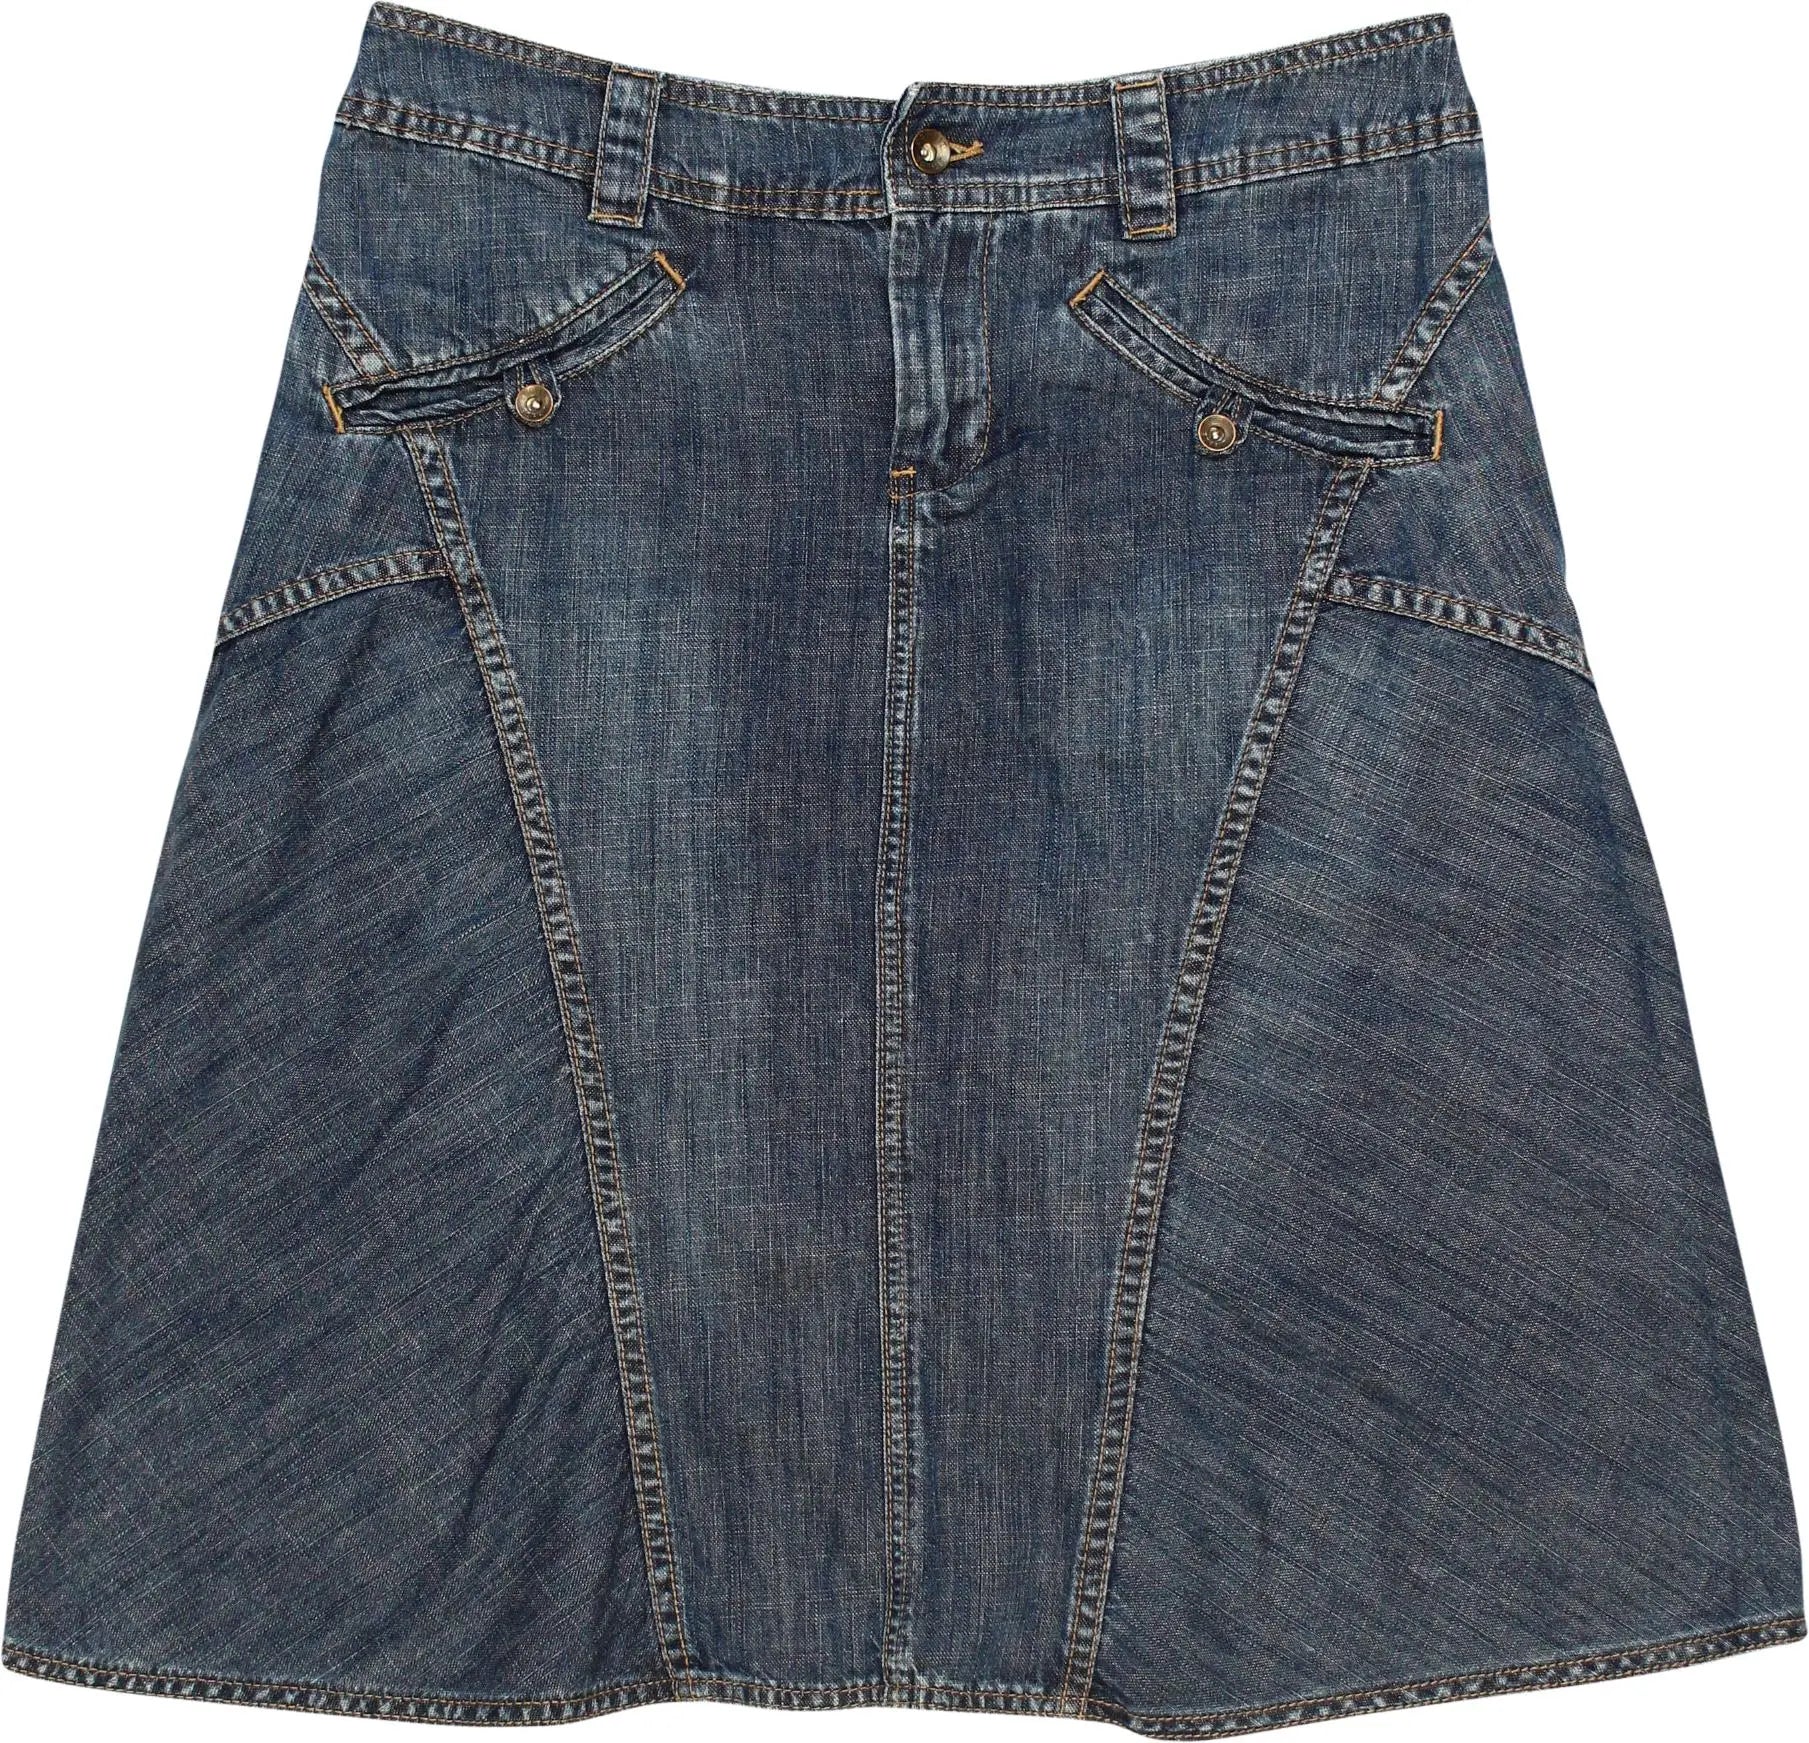 Esprit - Denim Skirt- ThriftTale.com - Vintage and second handclothing